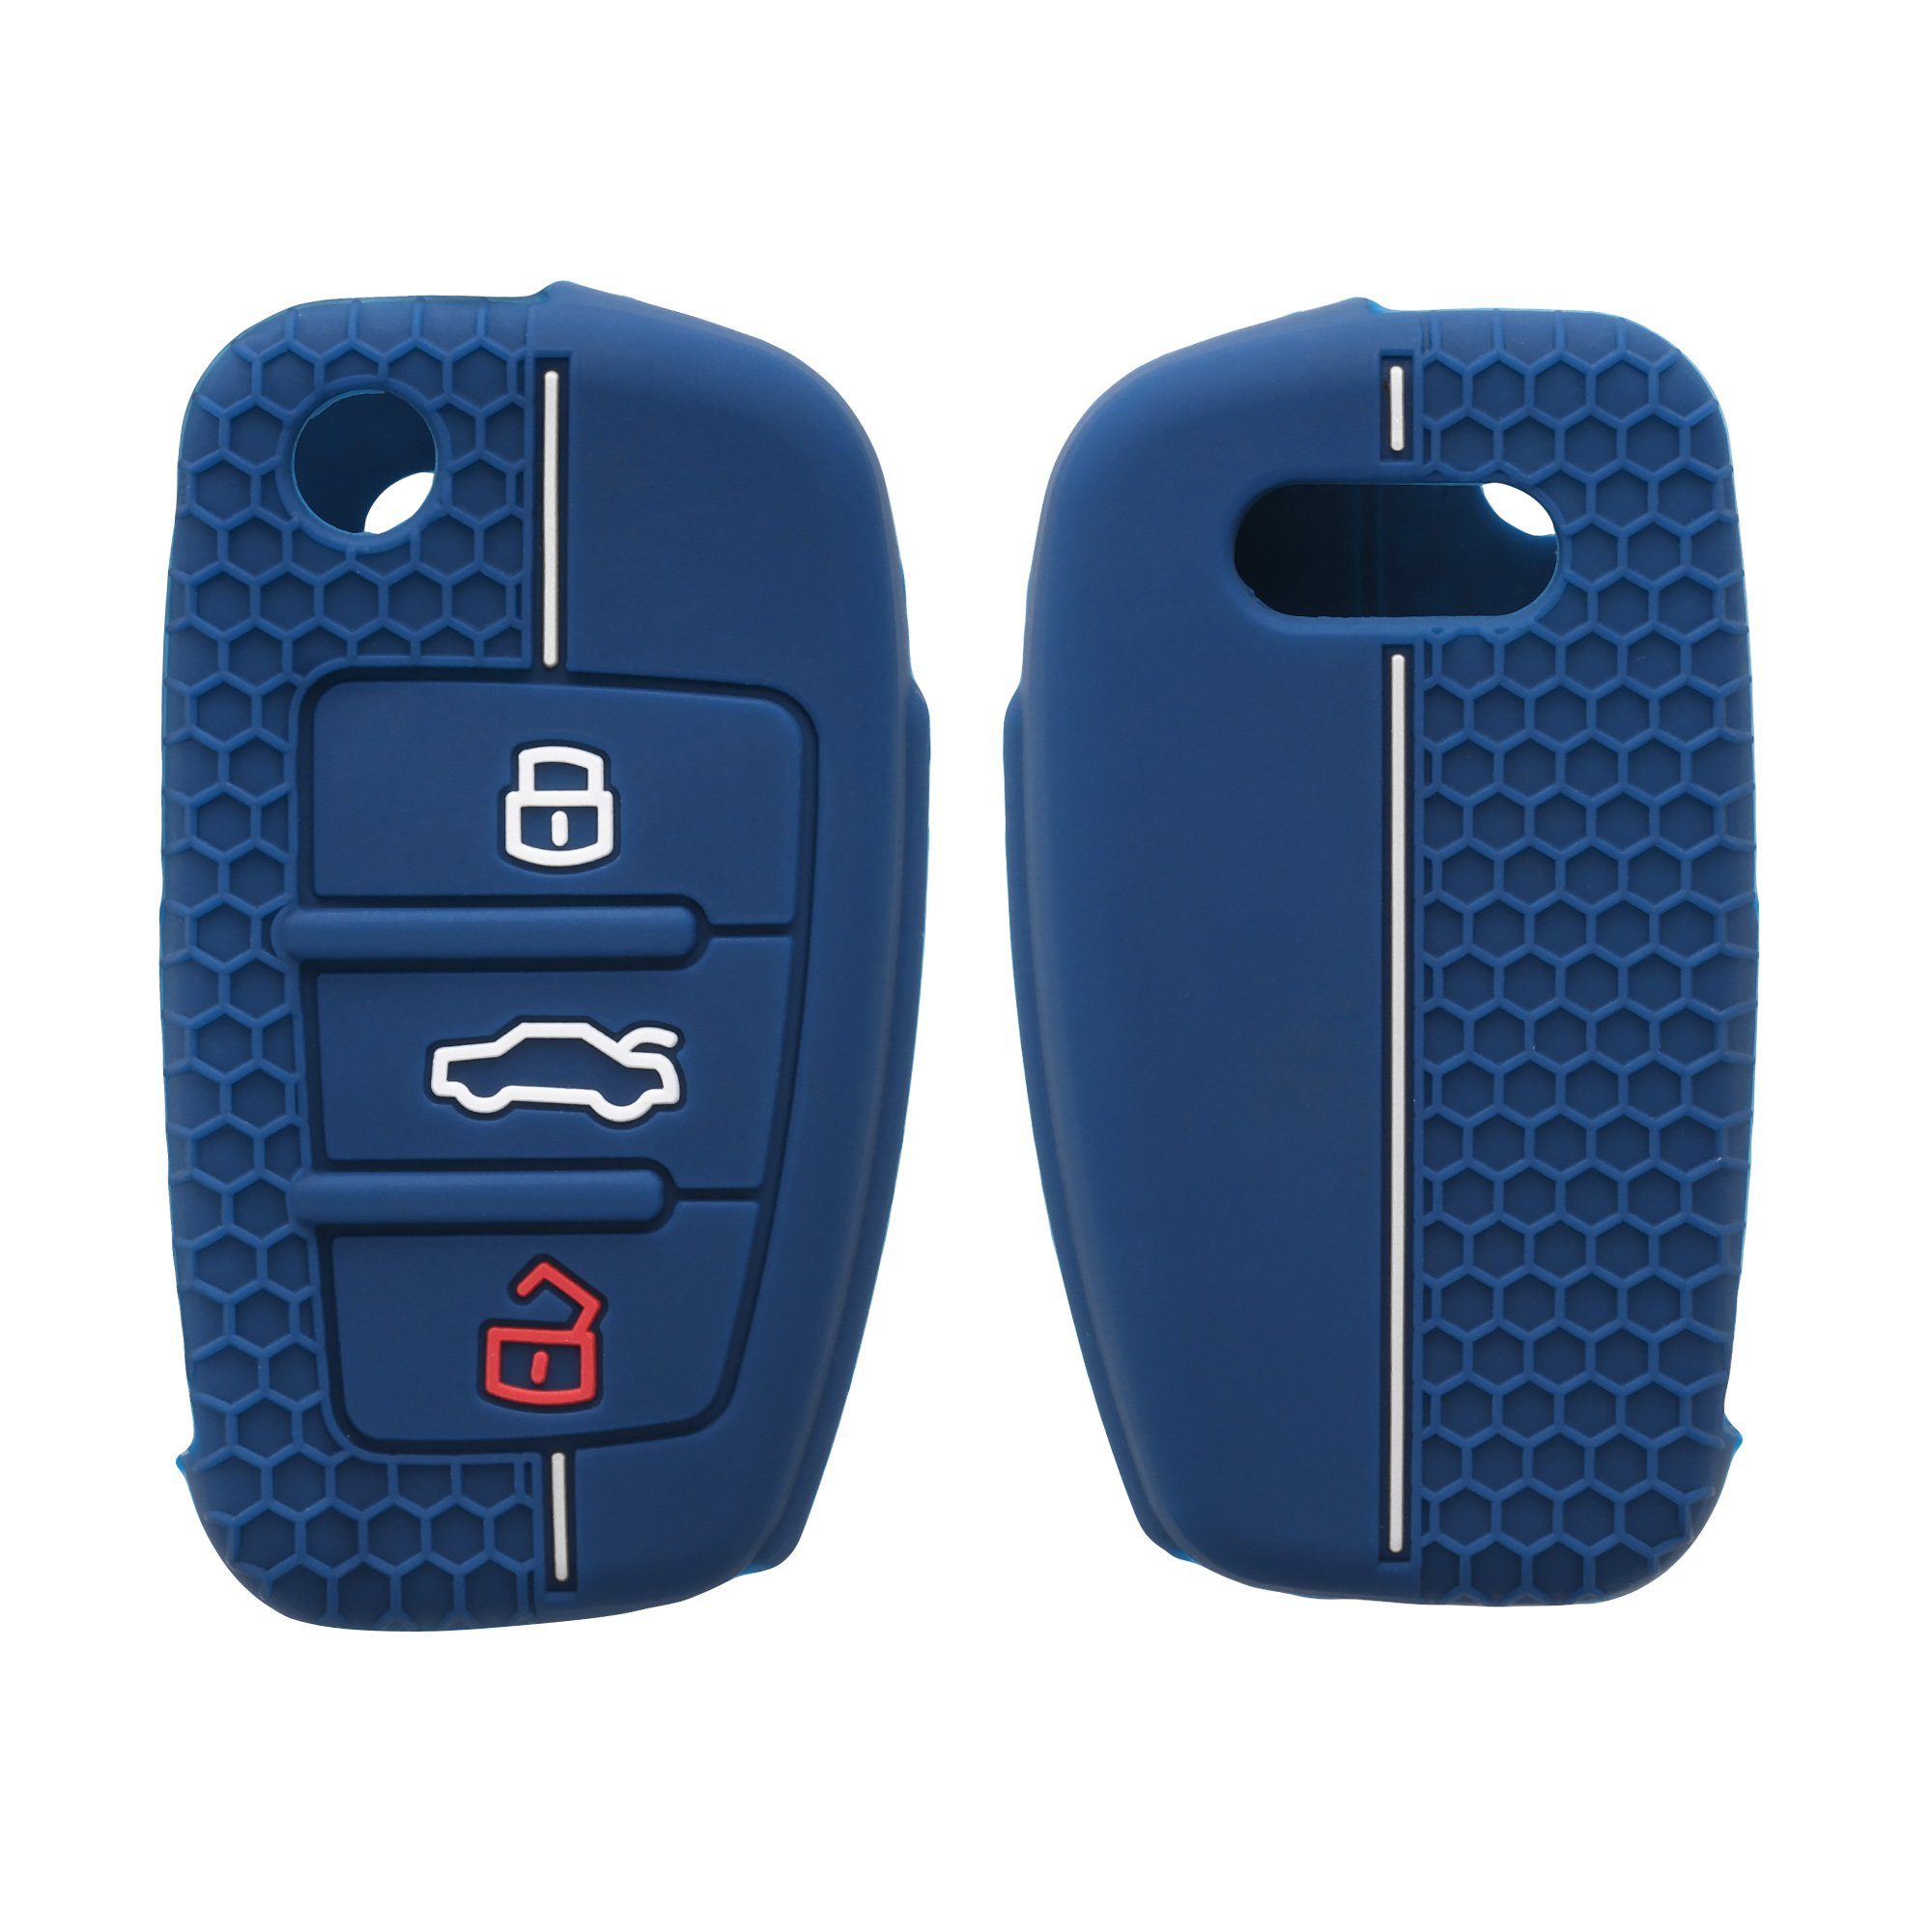 Autoschlüssel Audi, Silikon Schlüssel Case Schlüsselhülle kwmobile Hülle Dunkelblau Cover für Schlüsseltasche